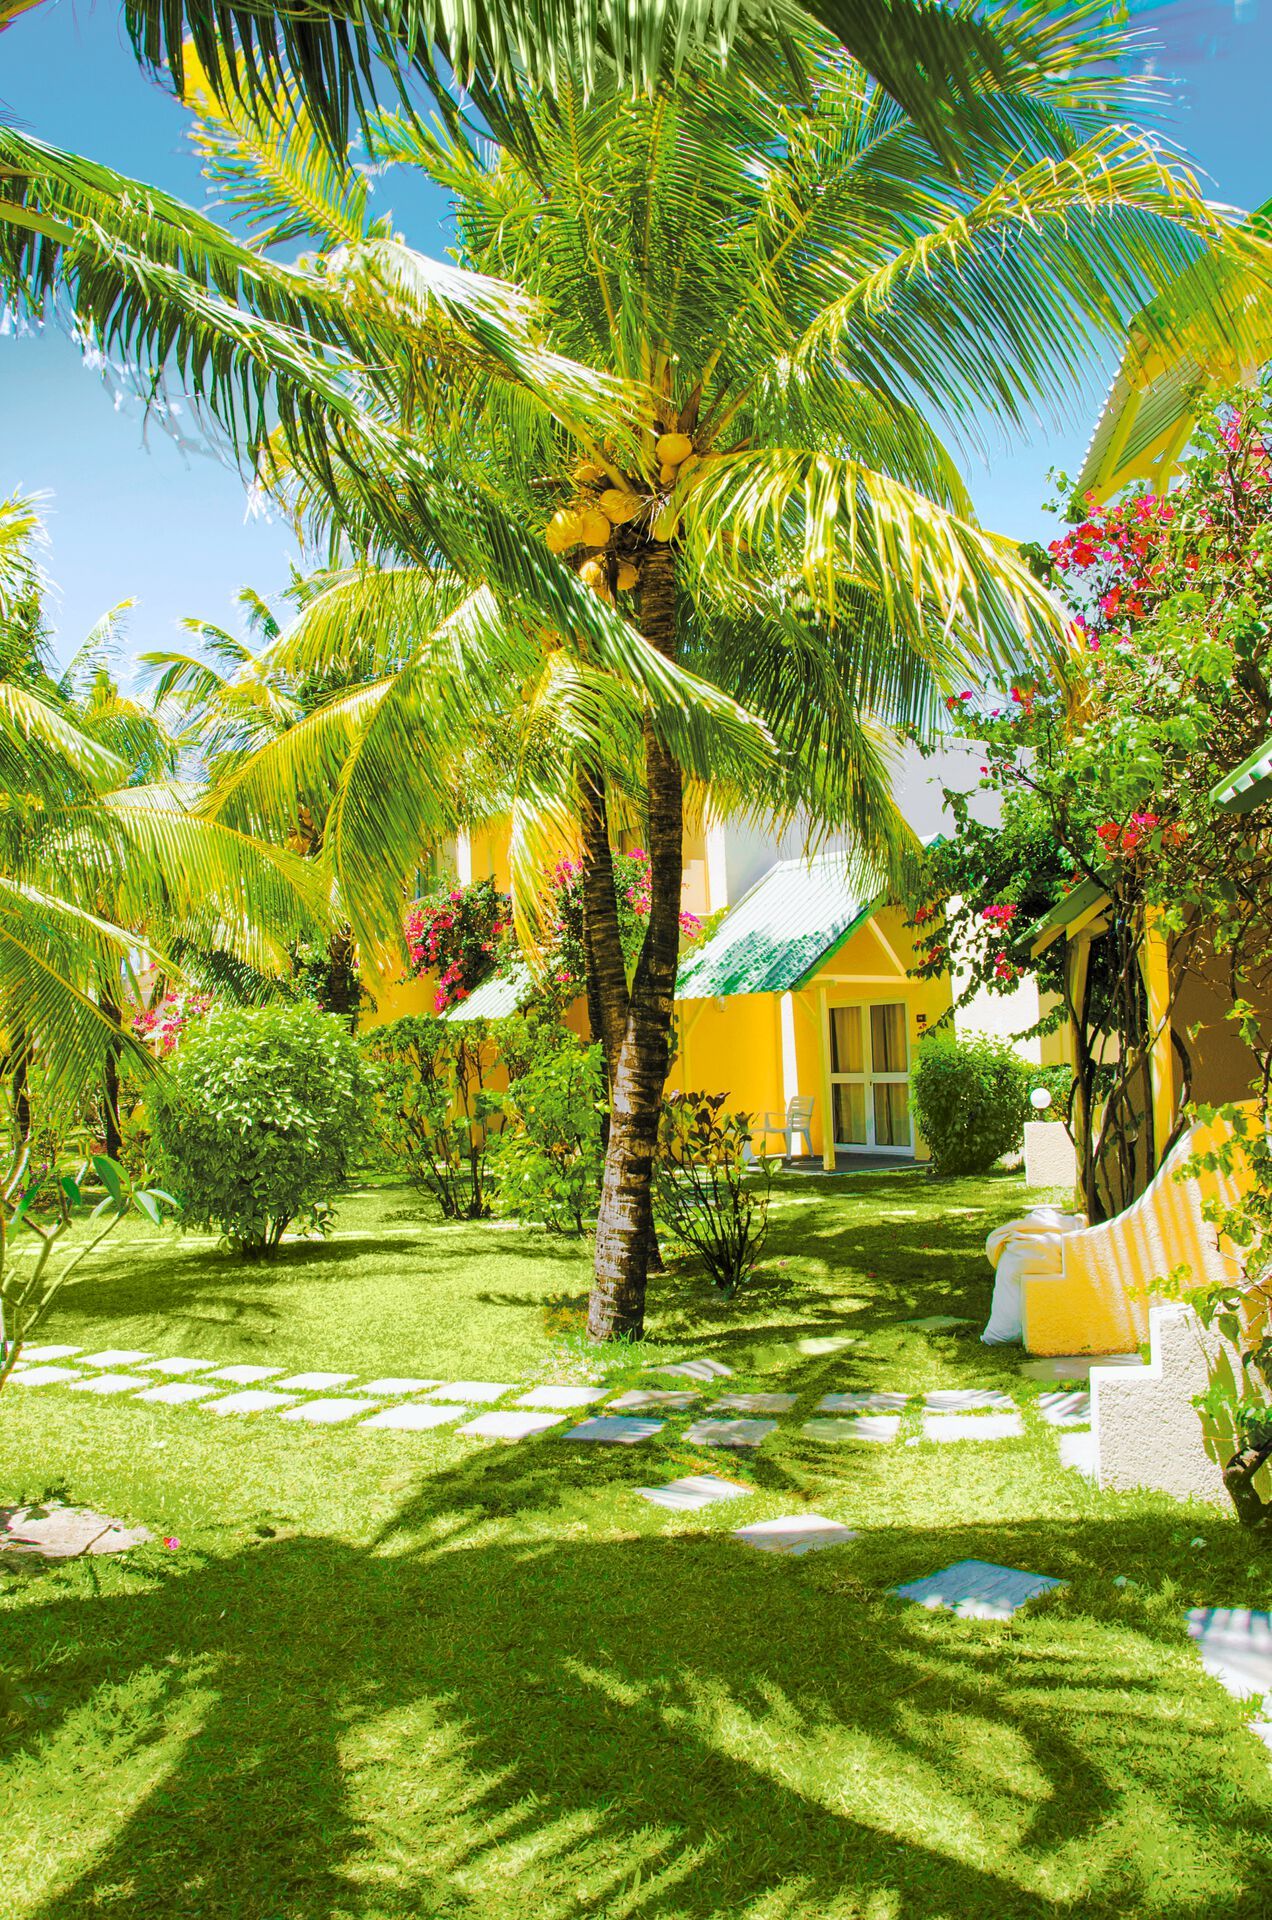 Maurice - Ile Maurice - Club FTI Voyages Silver Beach Mauritius 3*